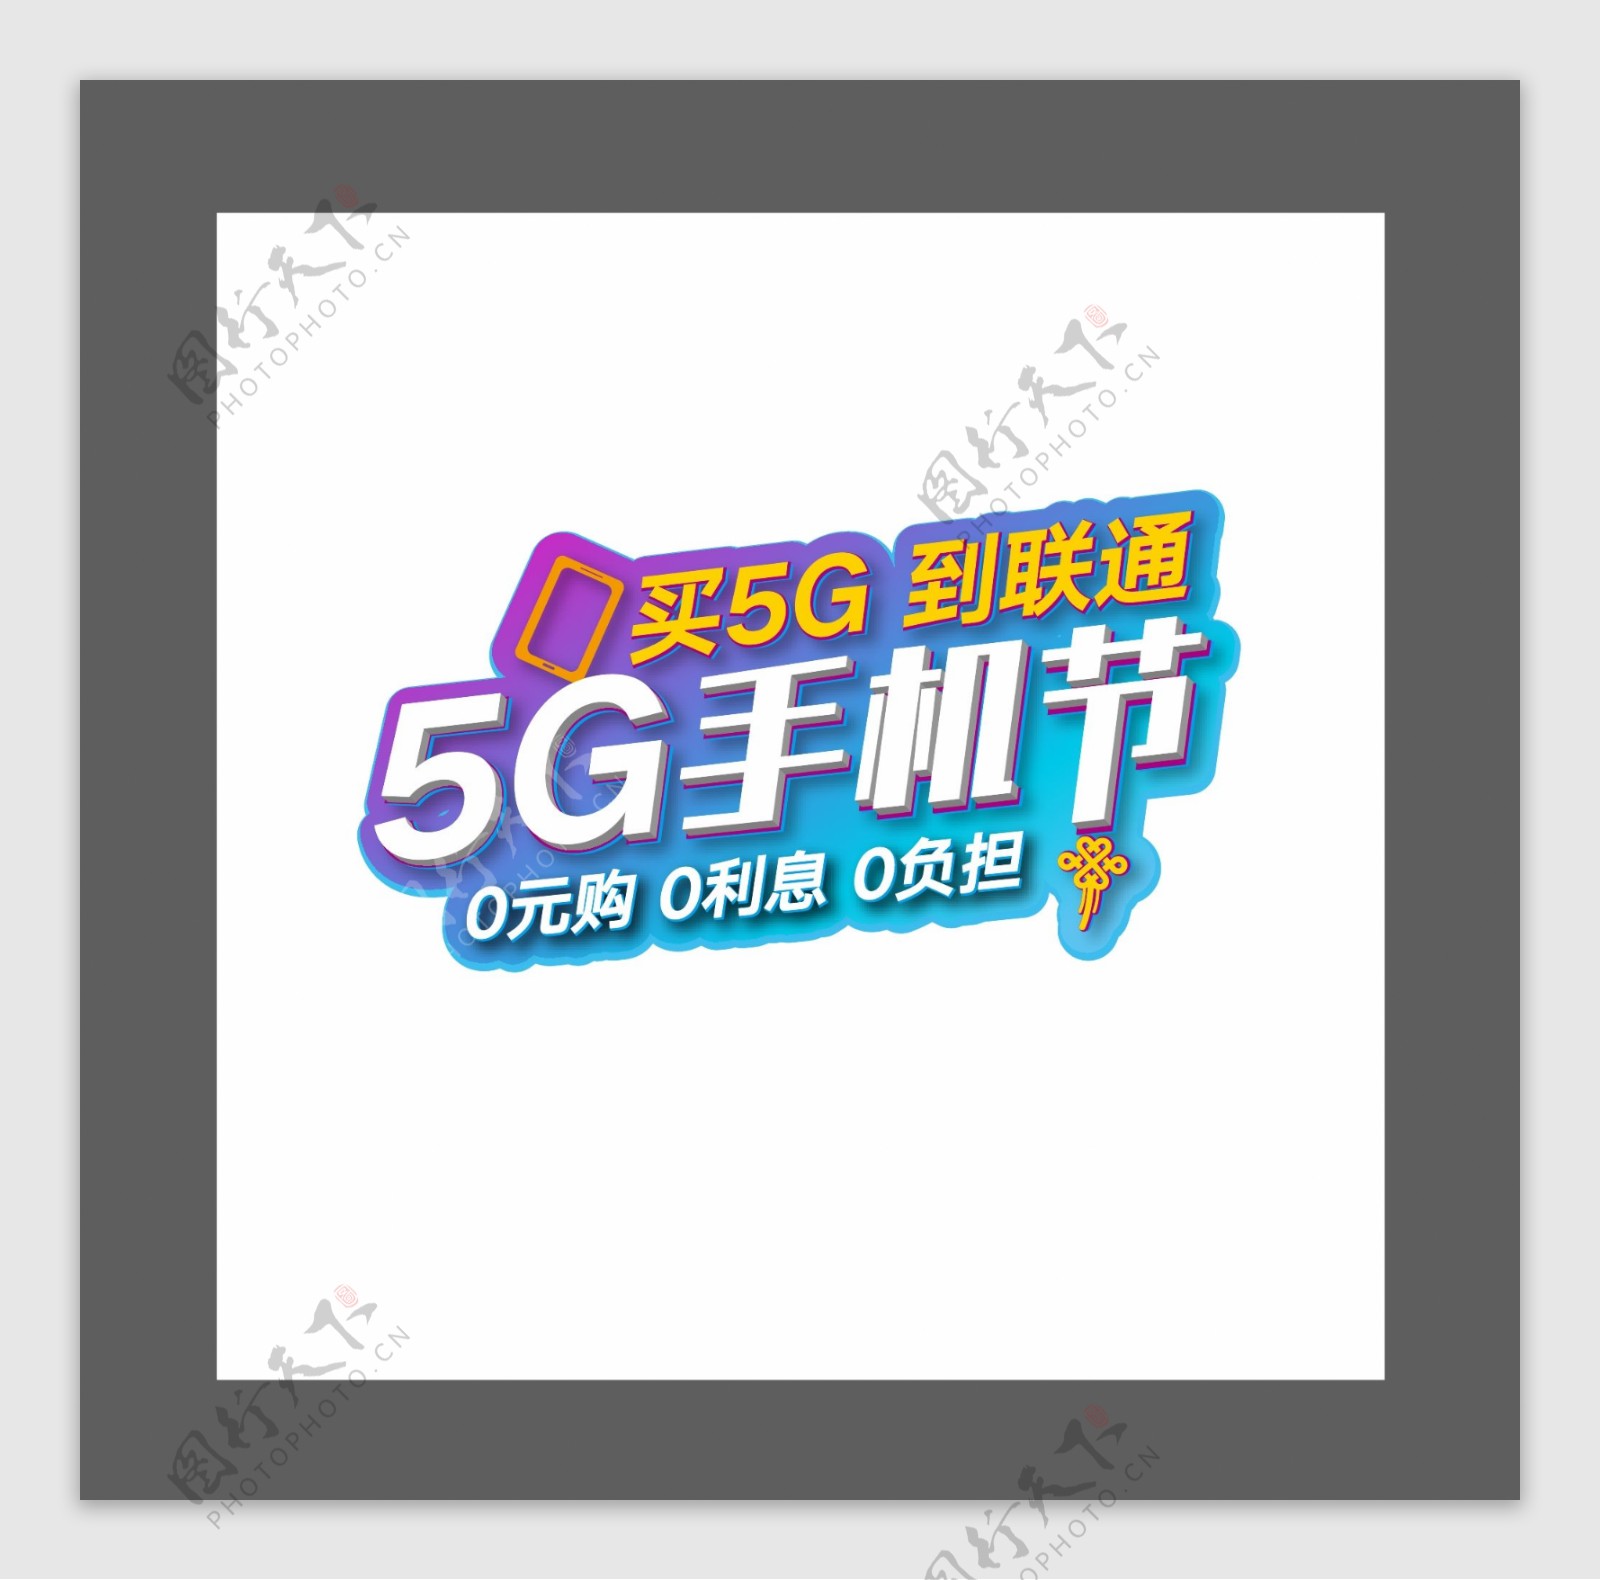 LOGO5g手机节活动标志